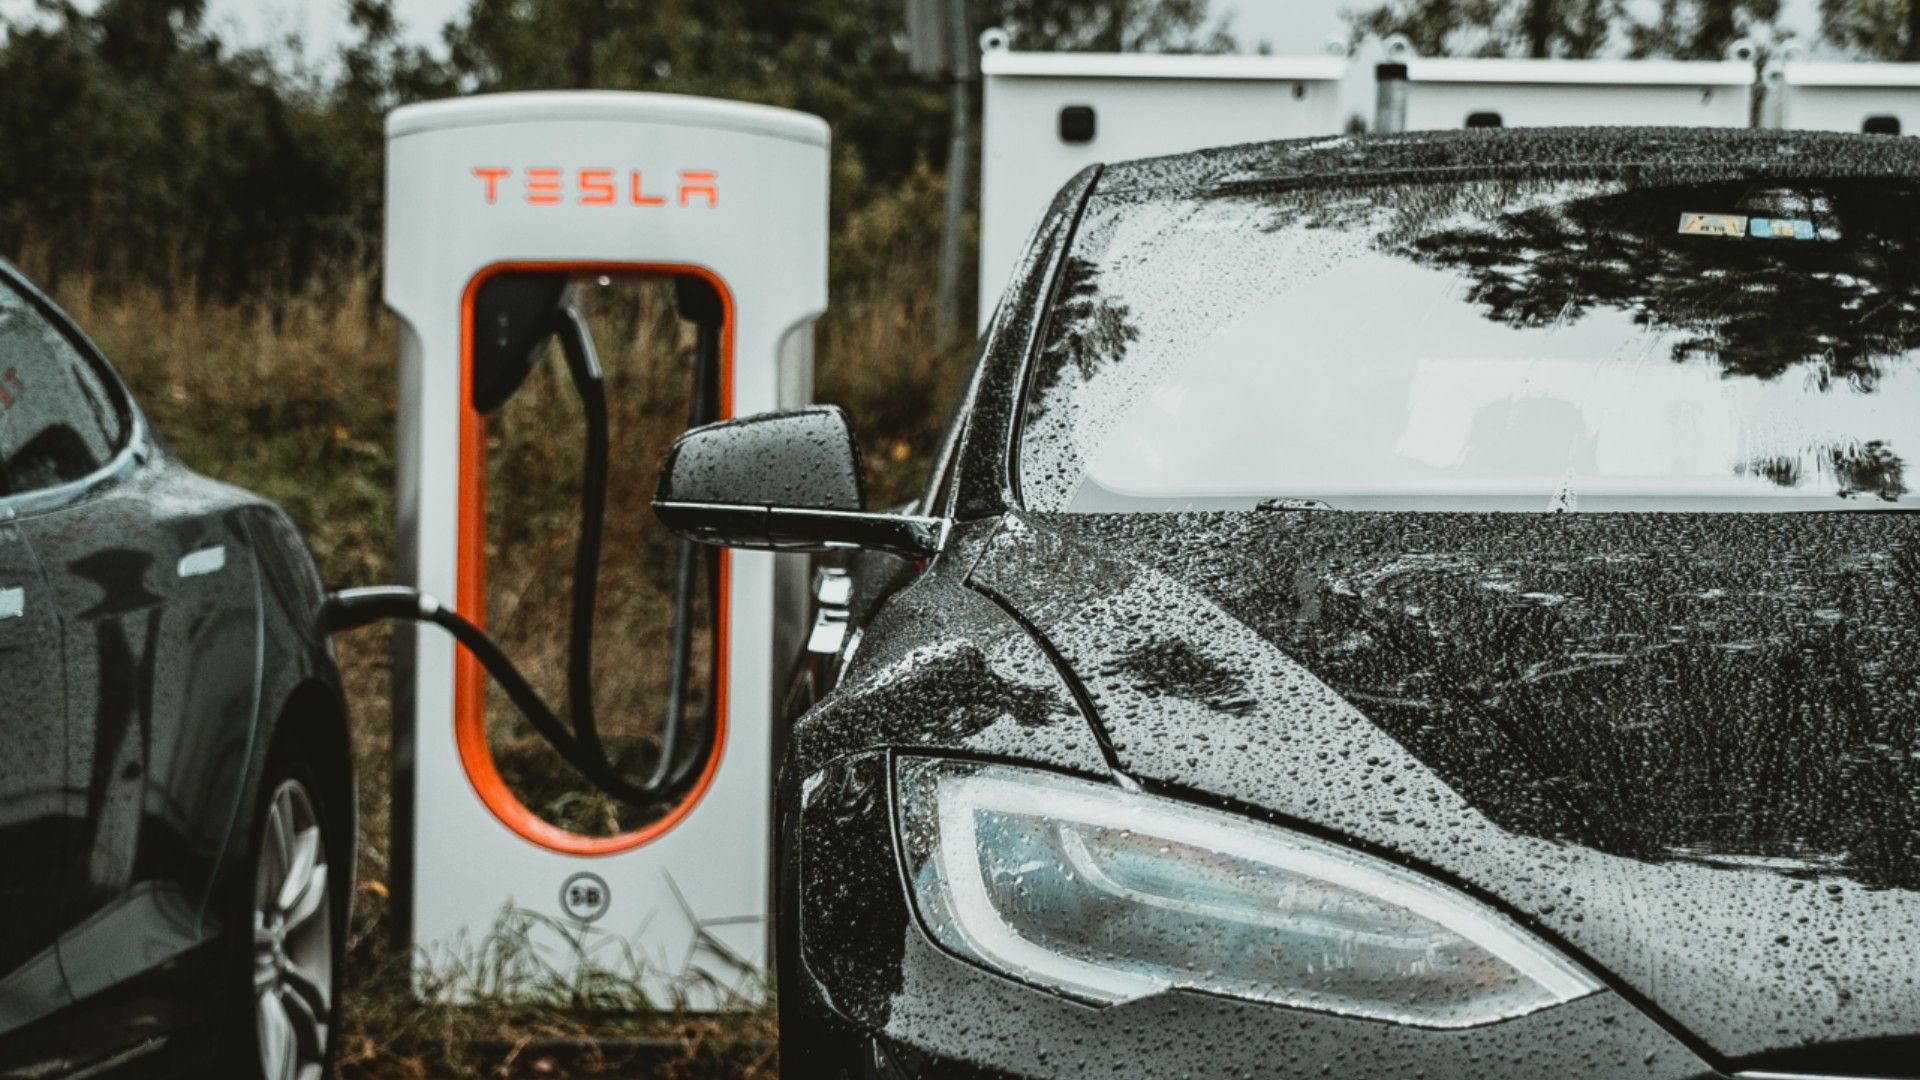 Two black Teslas at a charging station